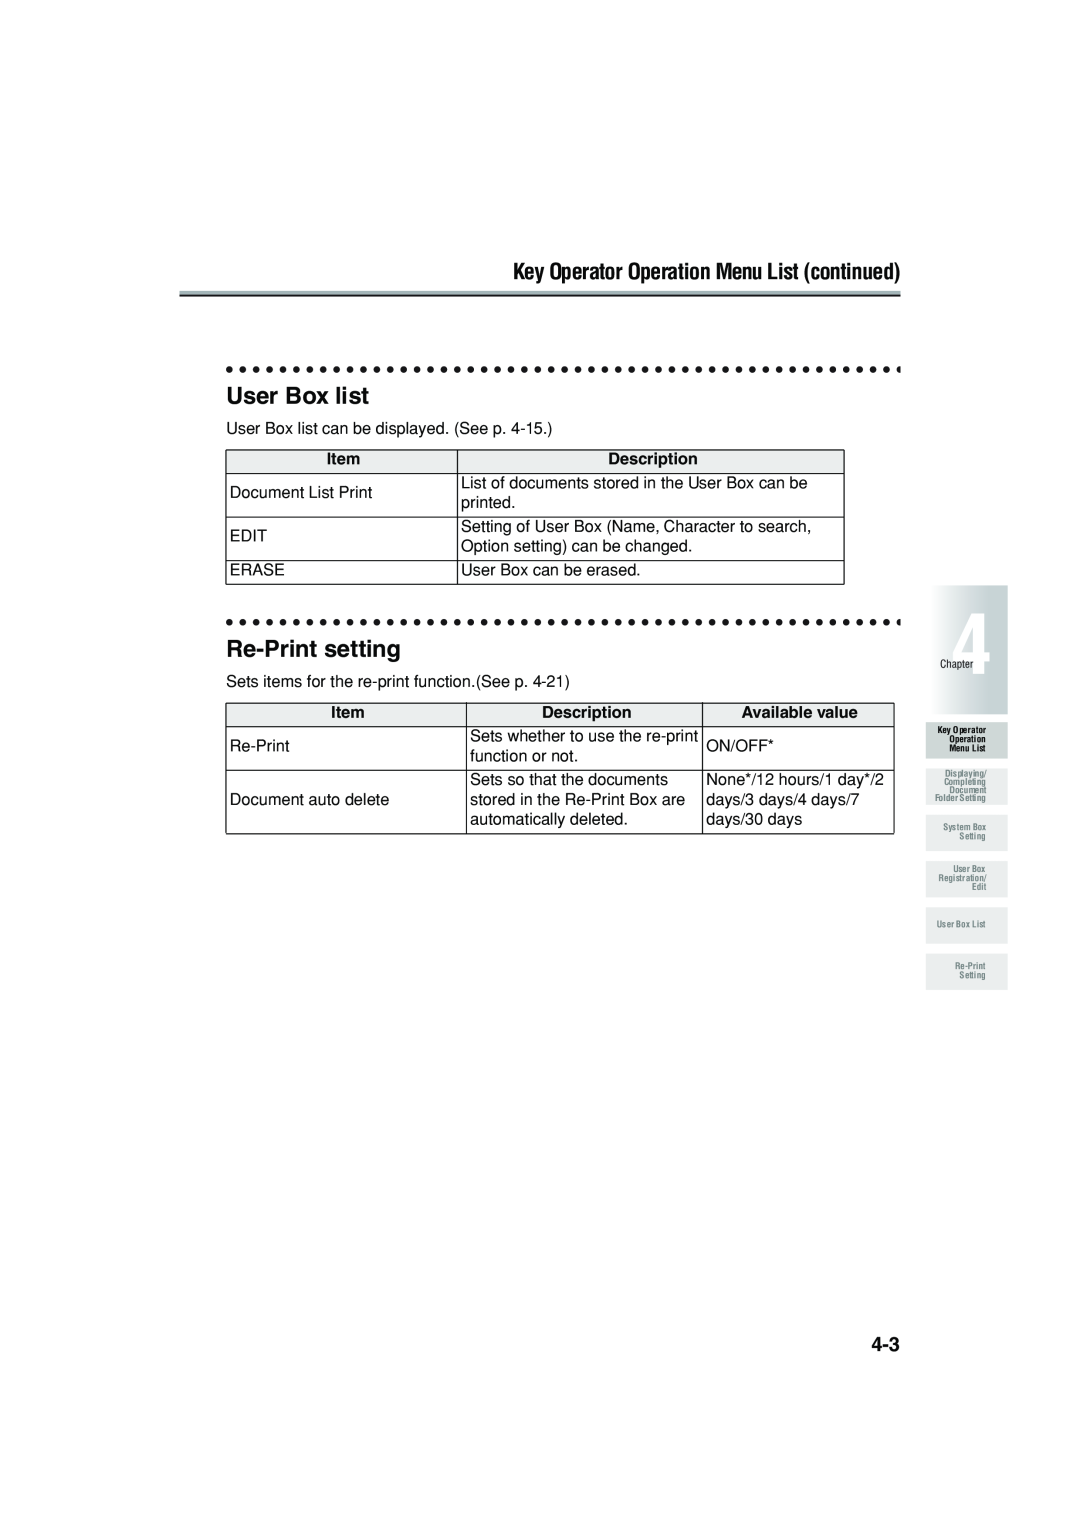 Konica Minolta 7222 manual User Box list, Re-Print setting, Key Operator Operation Menu List continued, Description 